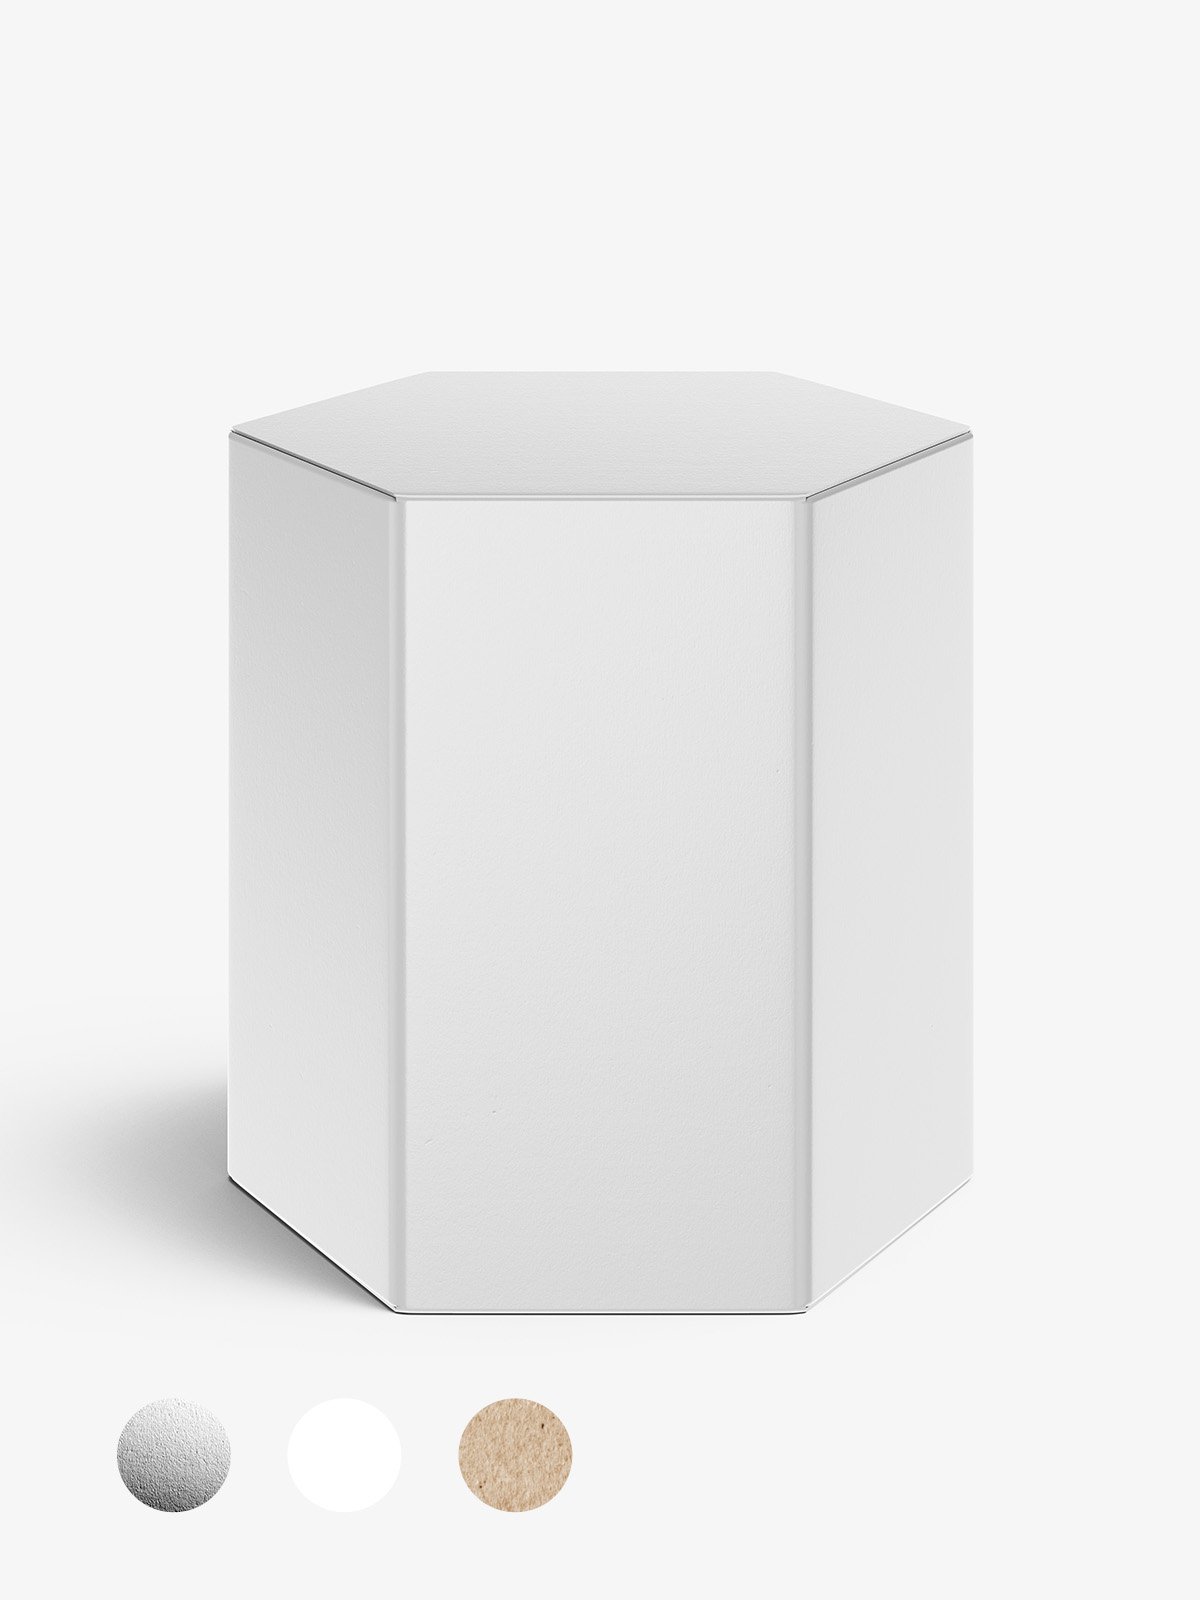 Hexagonal box mockup / white - metallic - kraft - Smarty ...